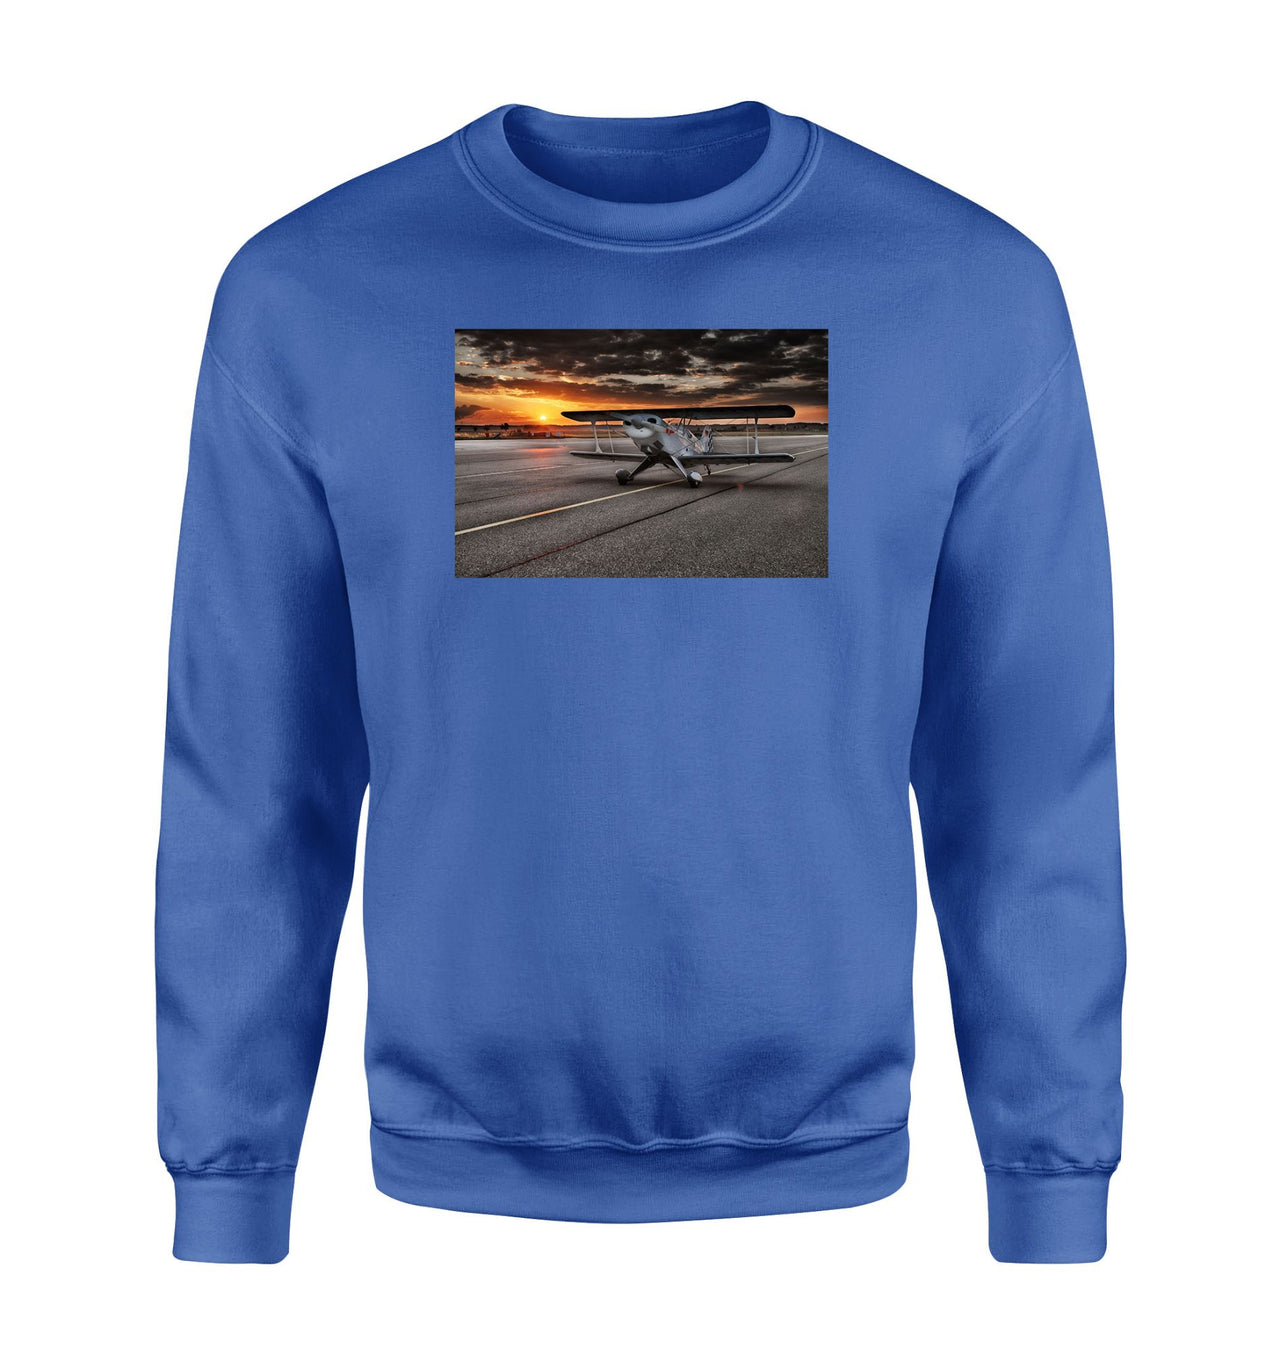 Beautiful Show Airplane Designed Sweatshirts